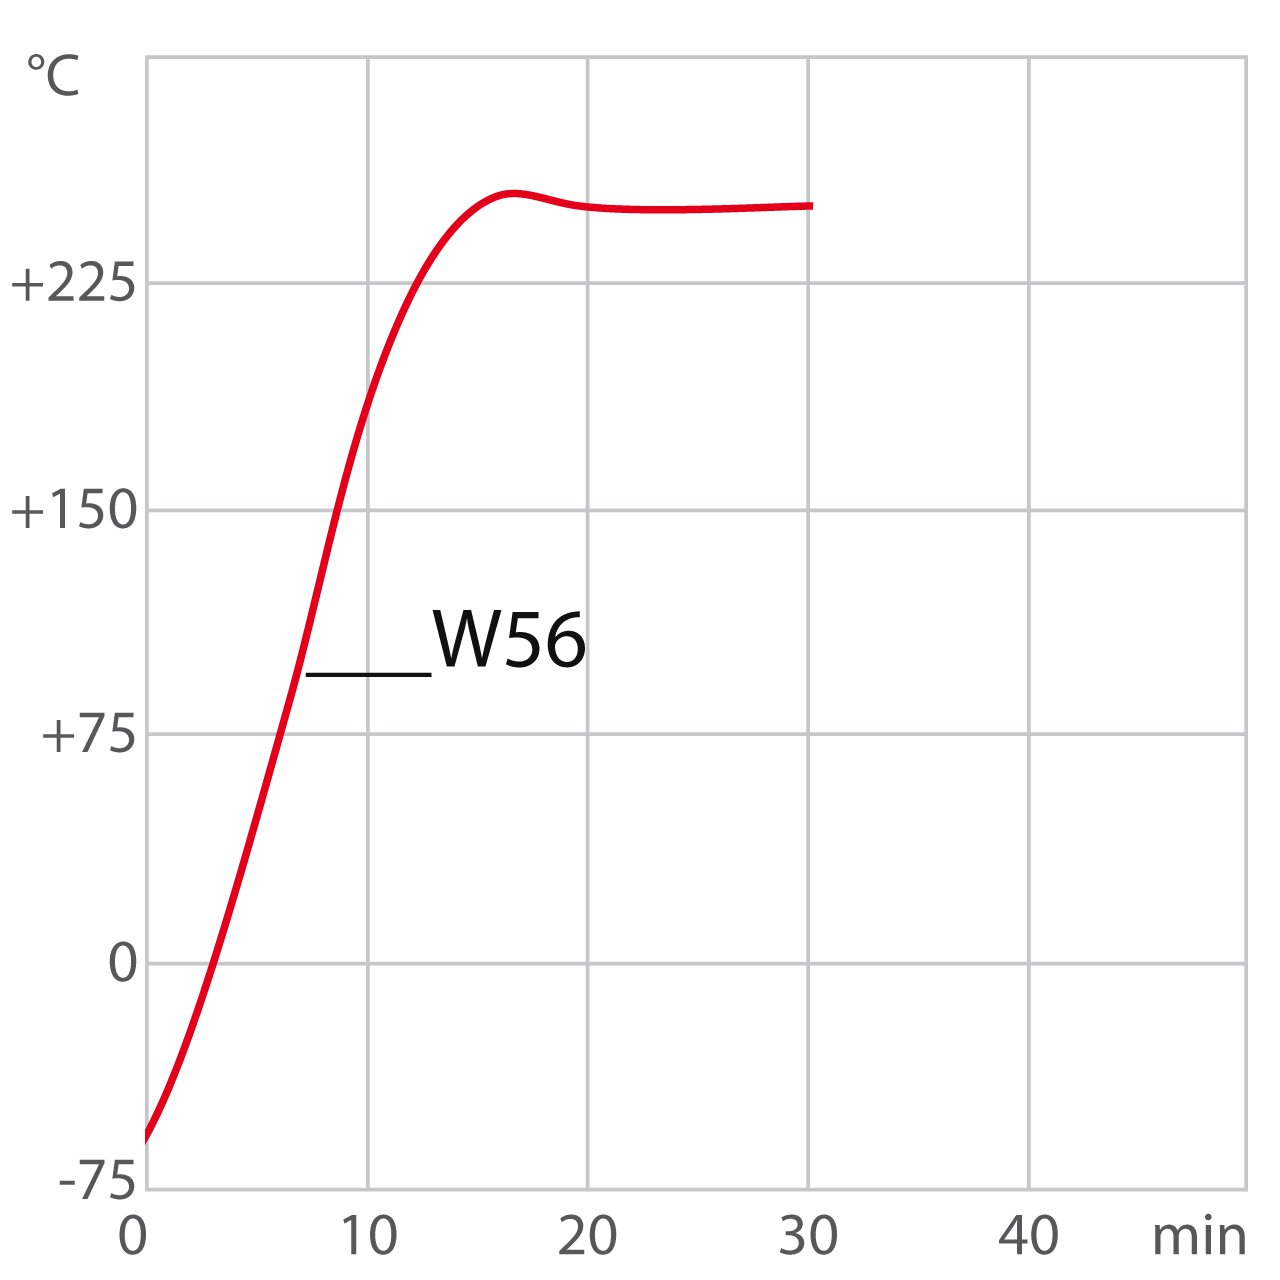 Heating curve process system PRESTO W56